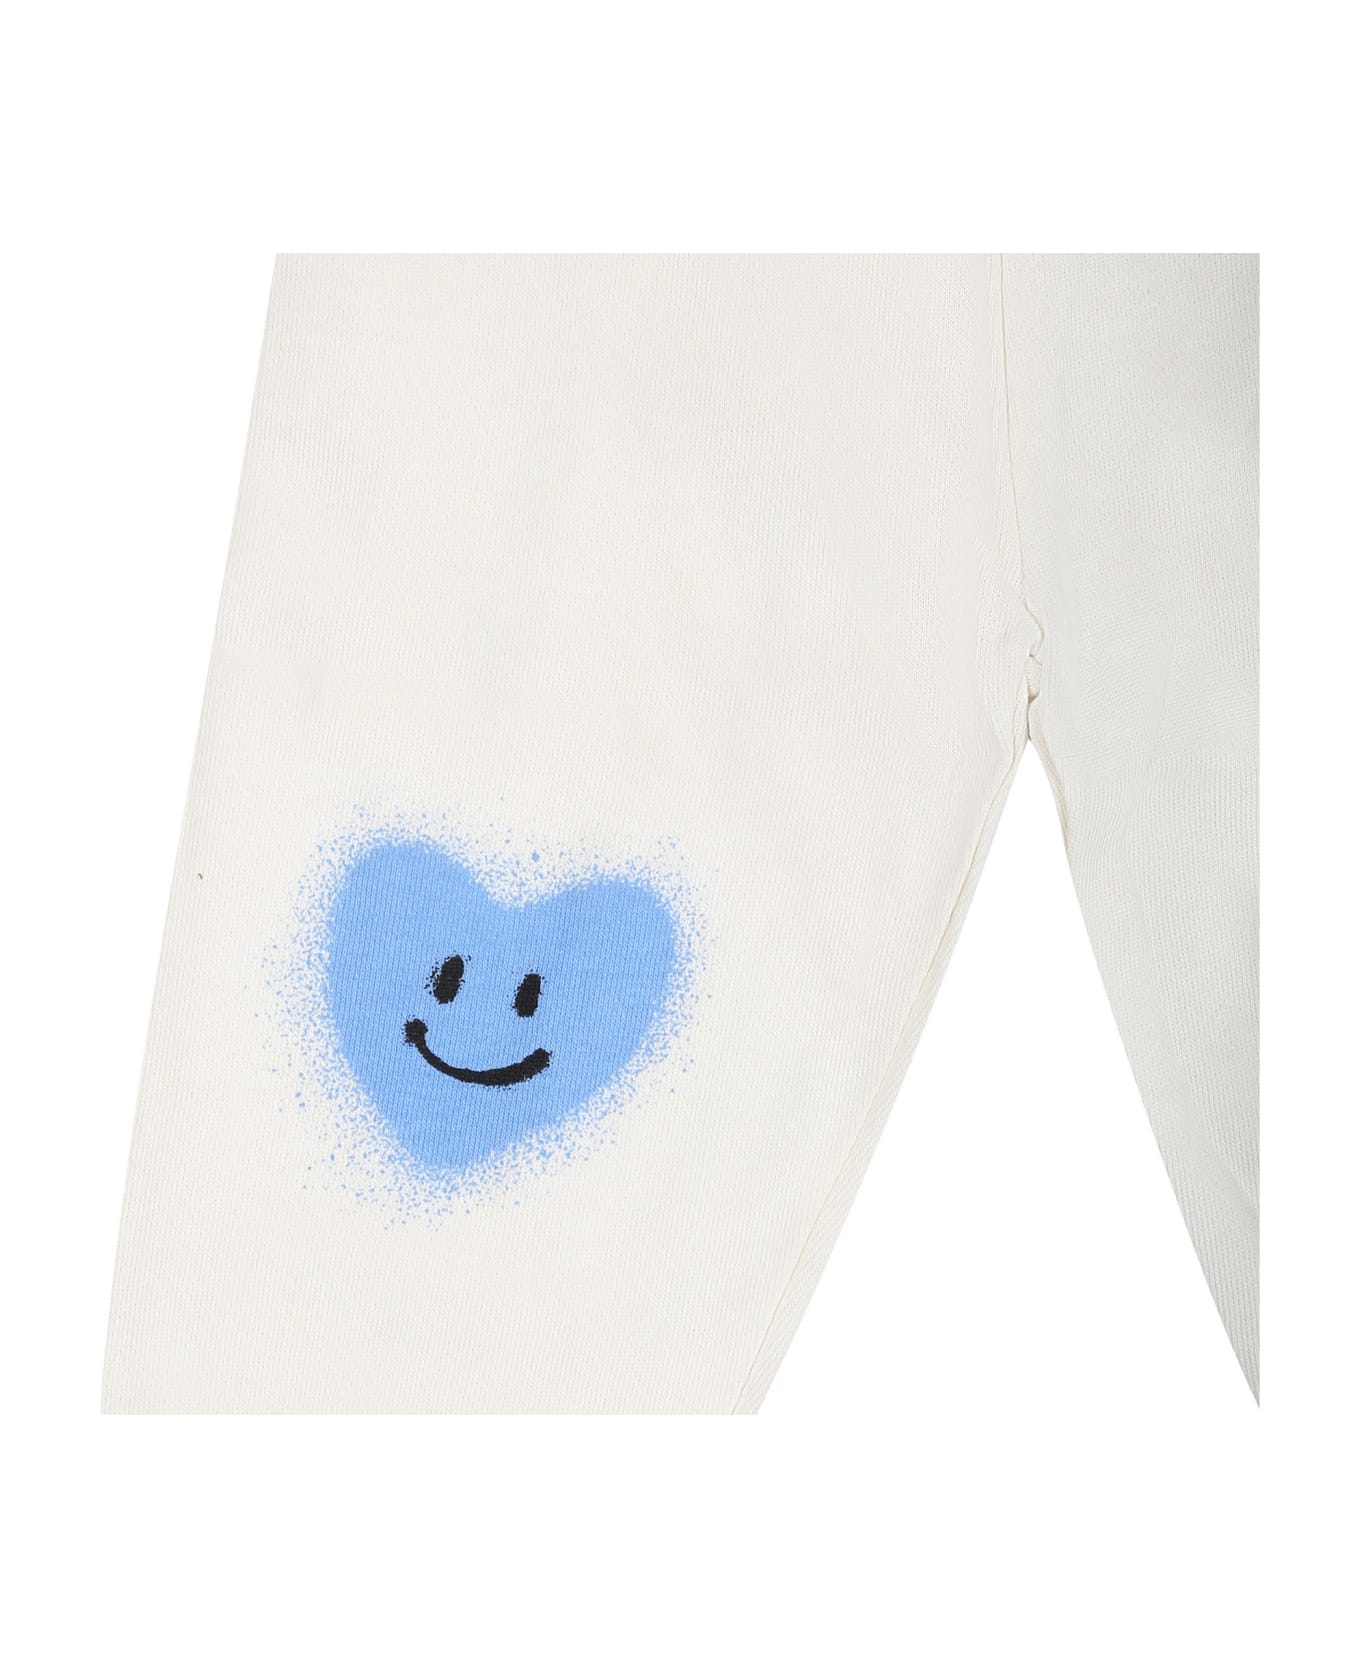 Molo White Sports Trousers For Babykids - White